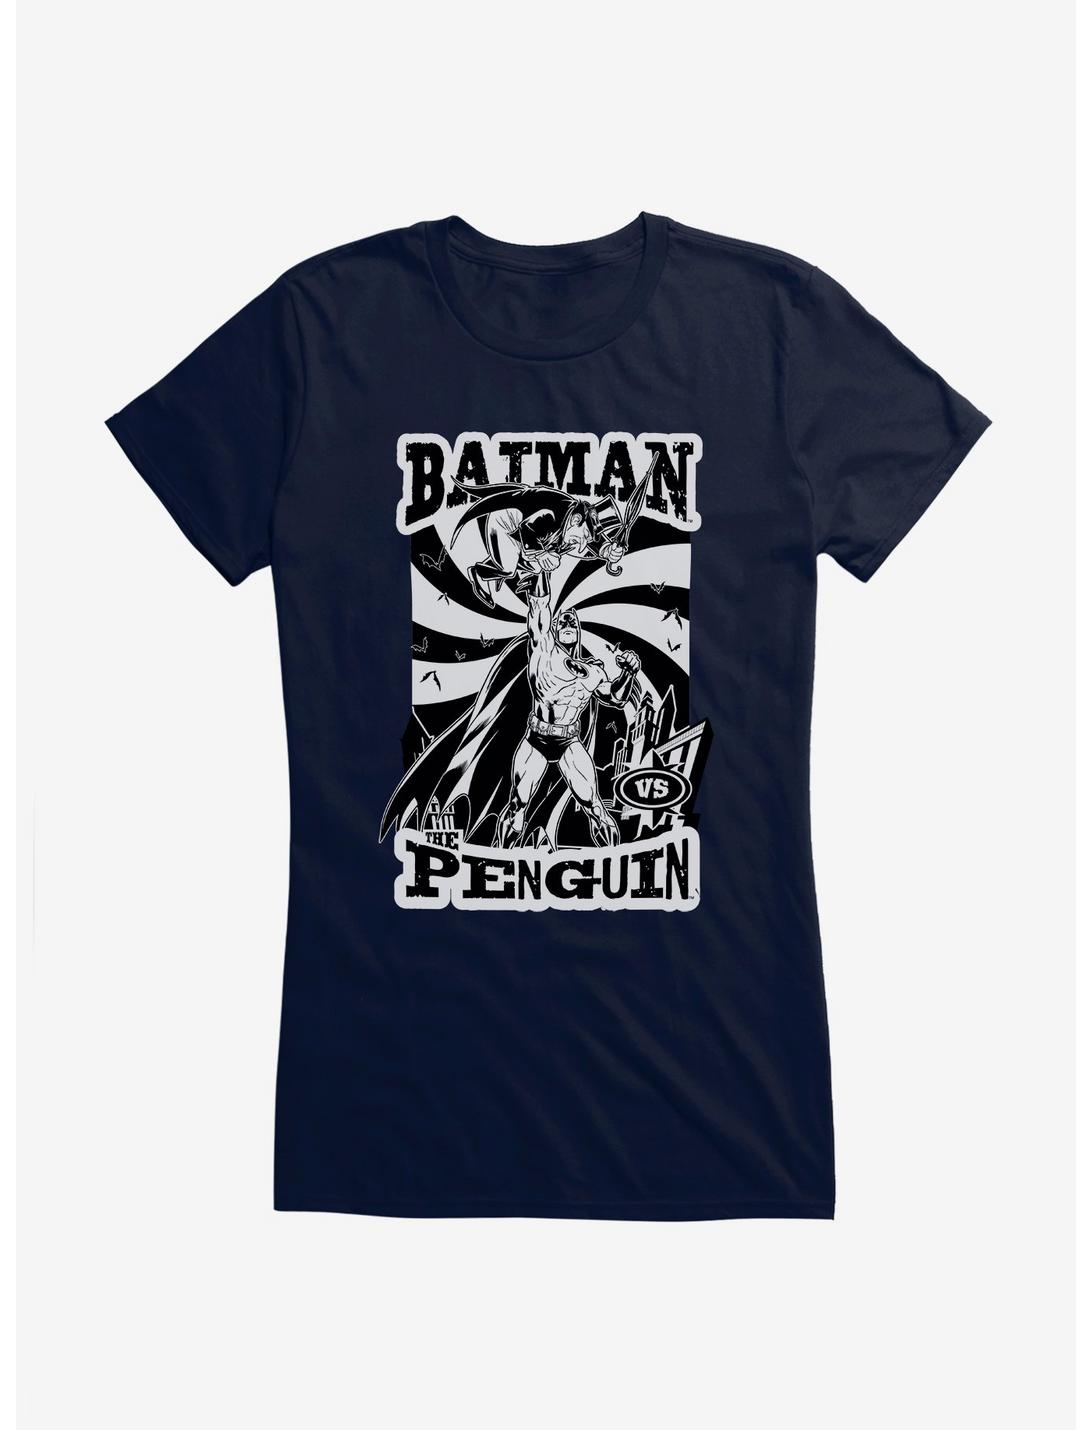 Batman The Penguin Vs Epic Battle Girls T-Shirt, NAVY, hi-res